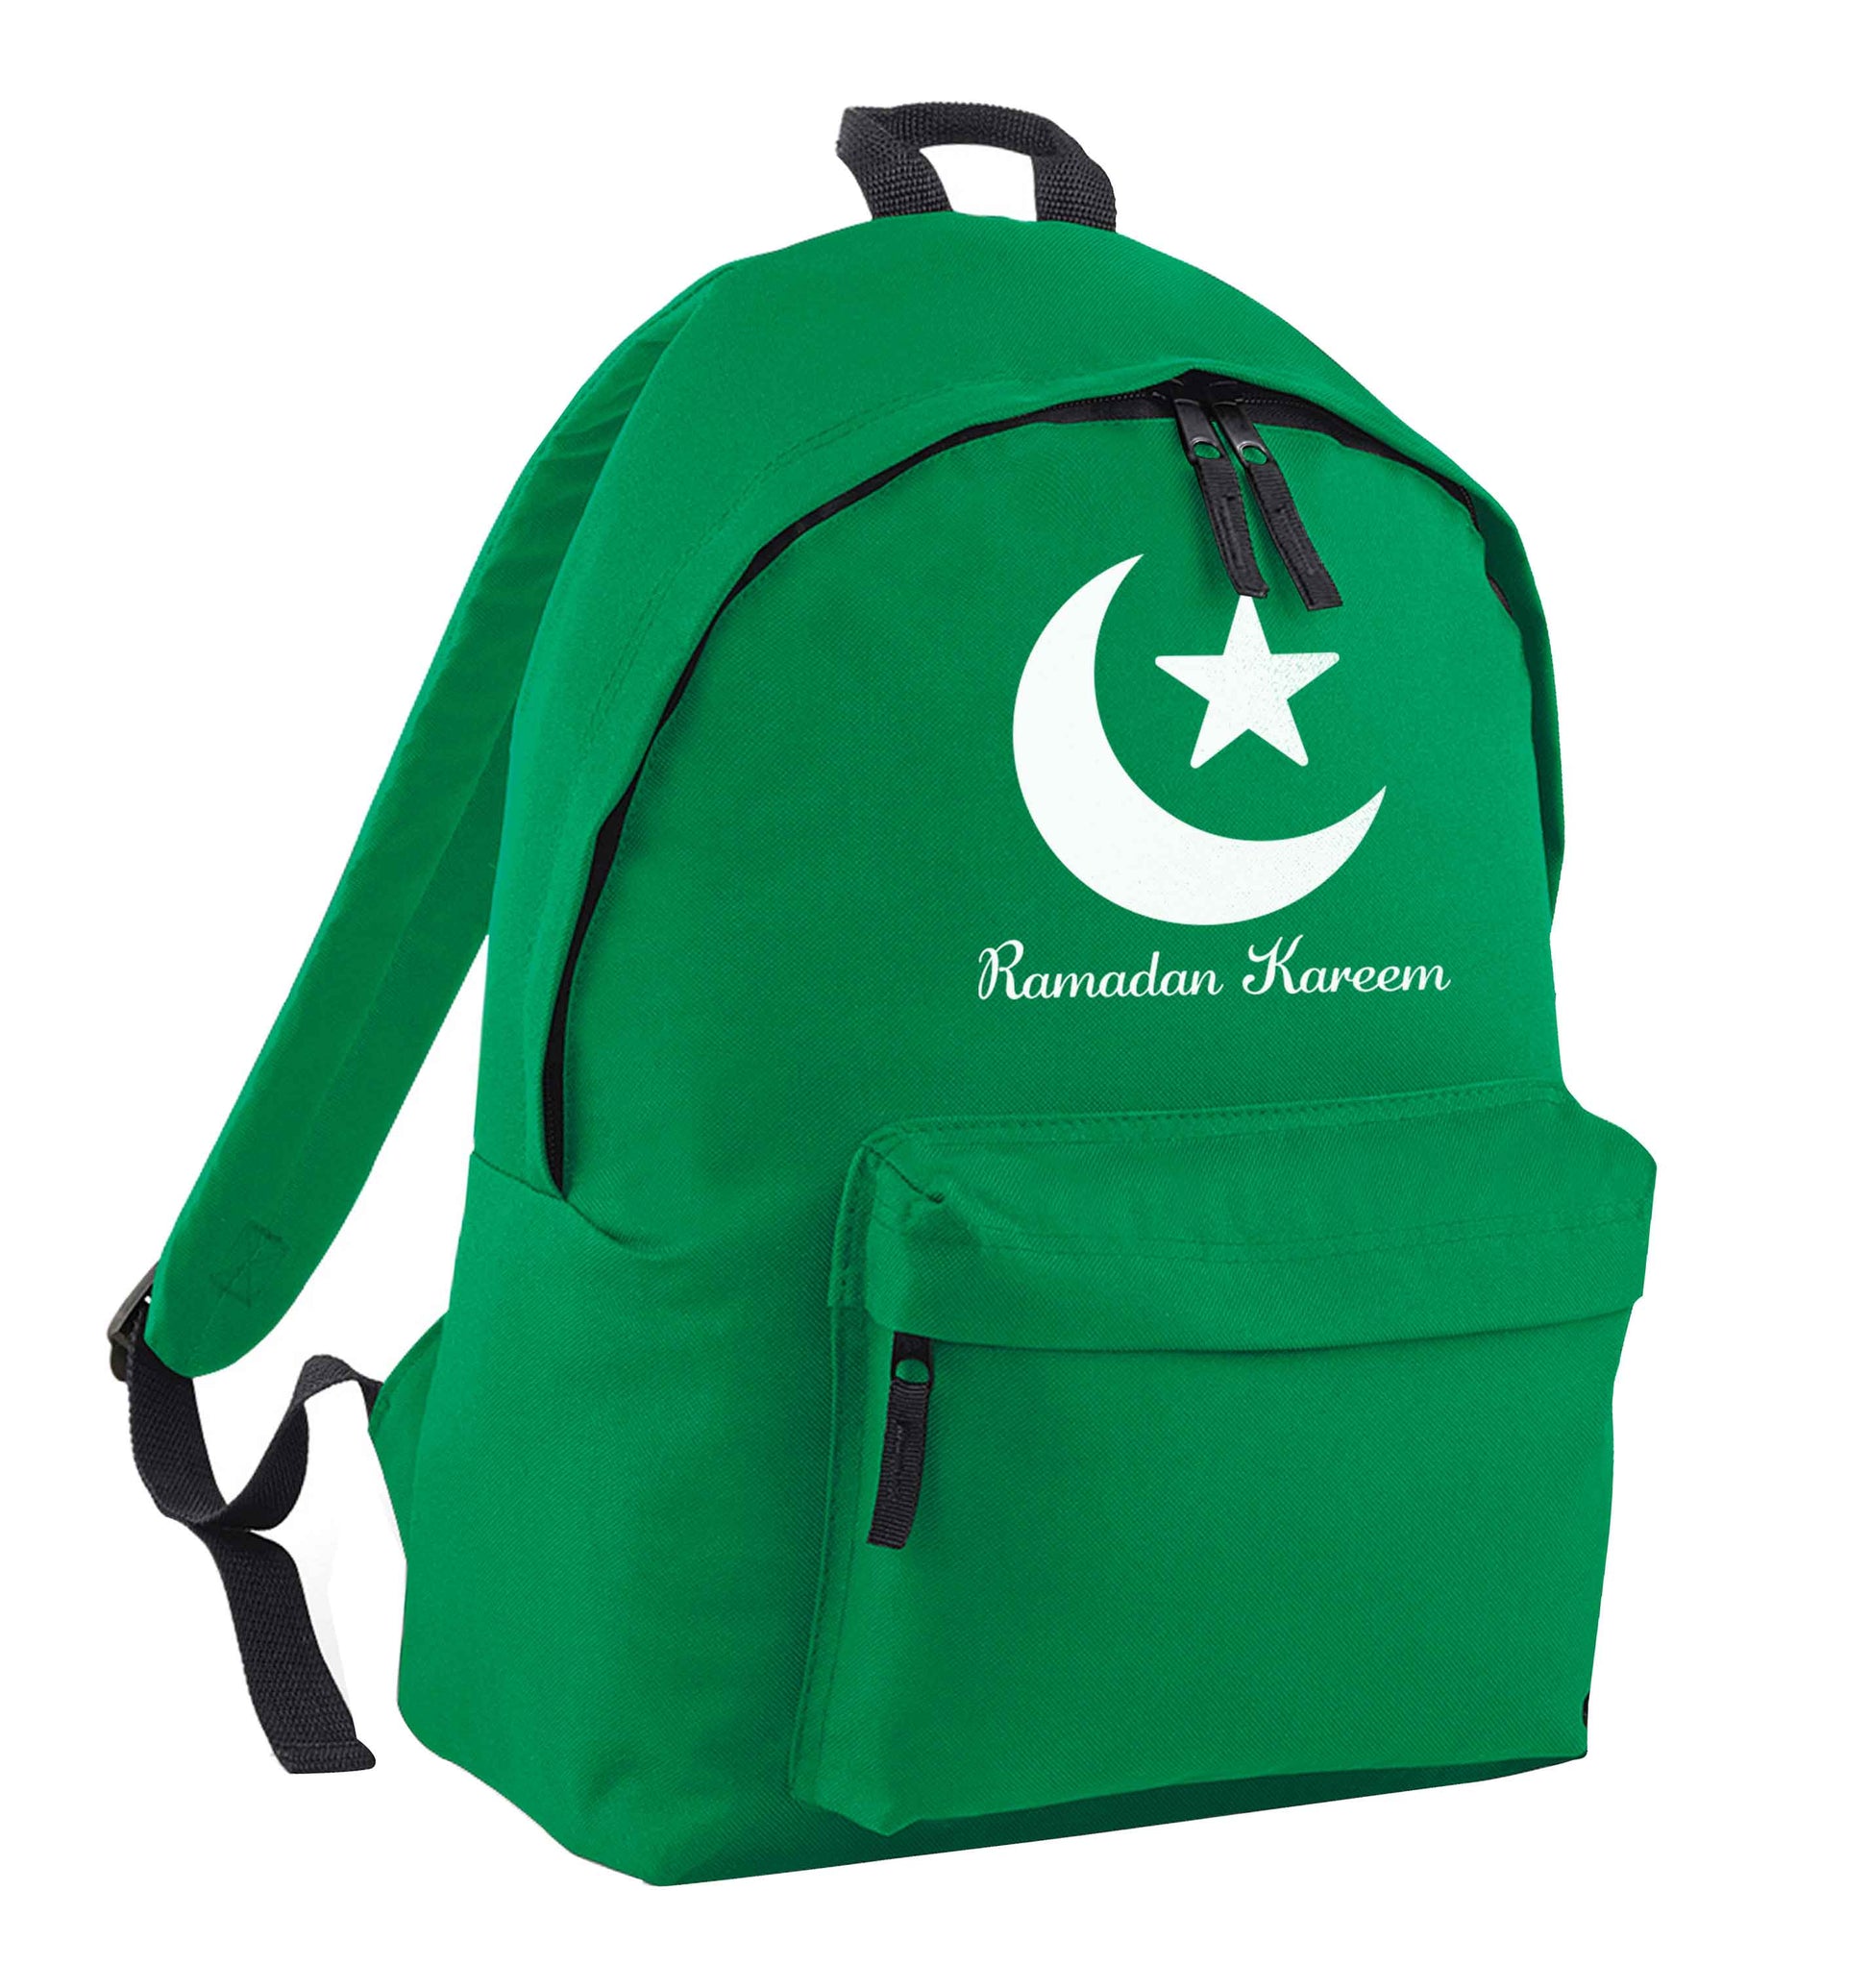 Ramadan kareem green adults backpack